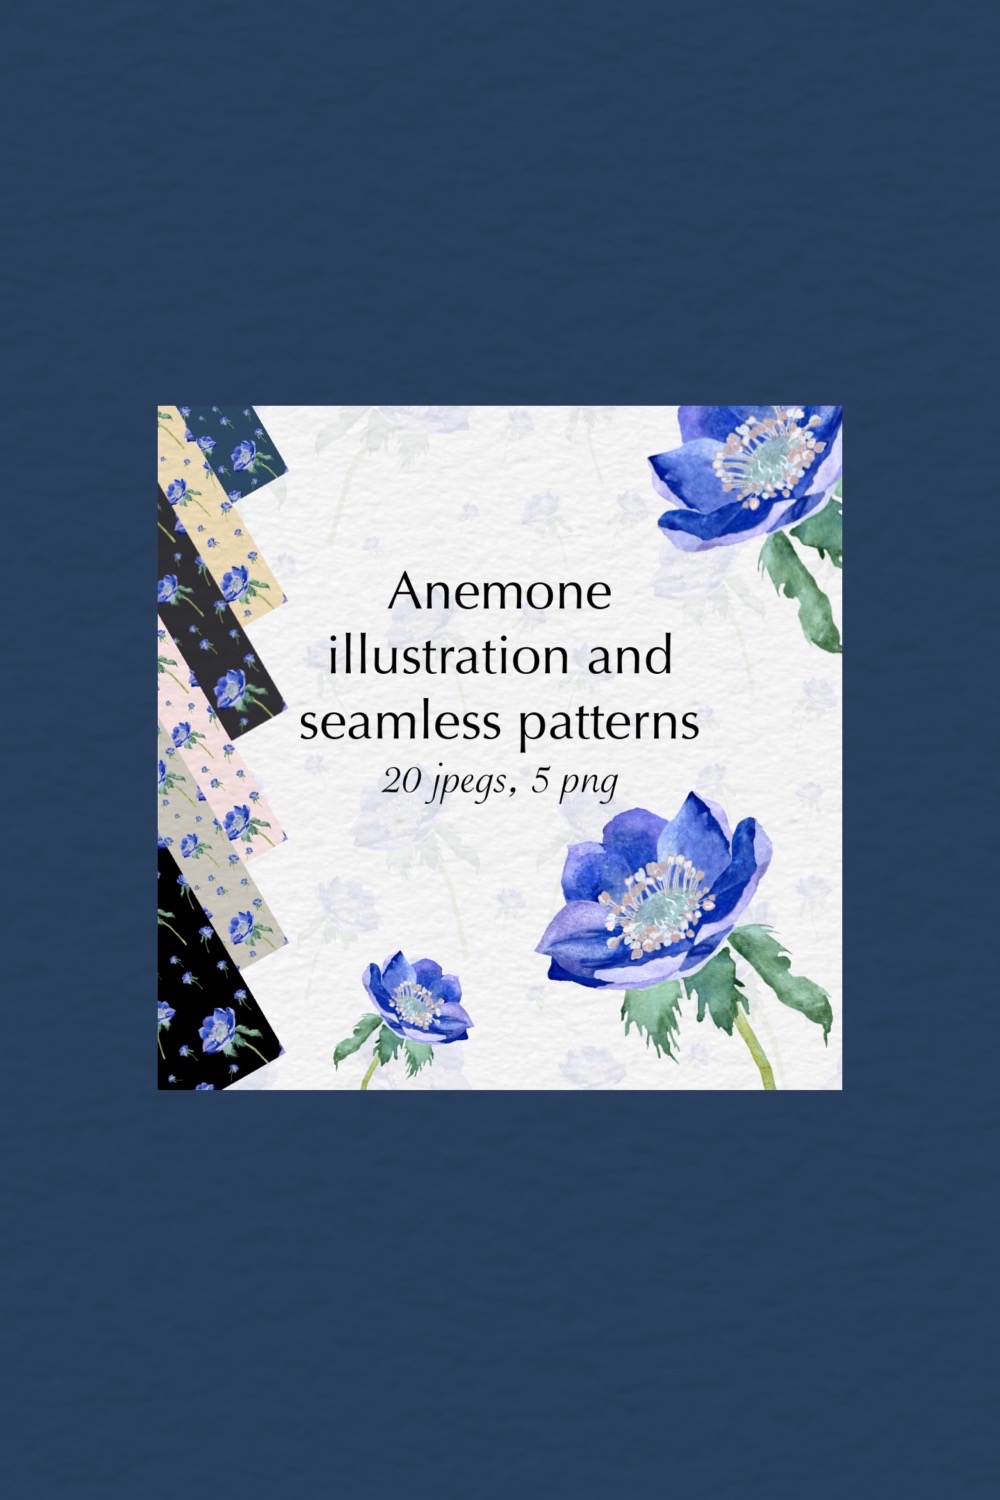 Anemone Flower Illustration and Seamless Patterns pinterest image.